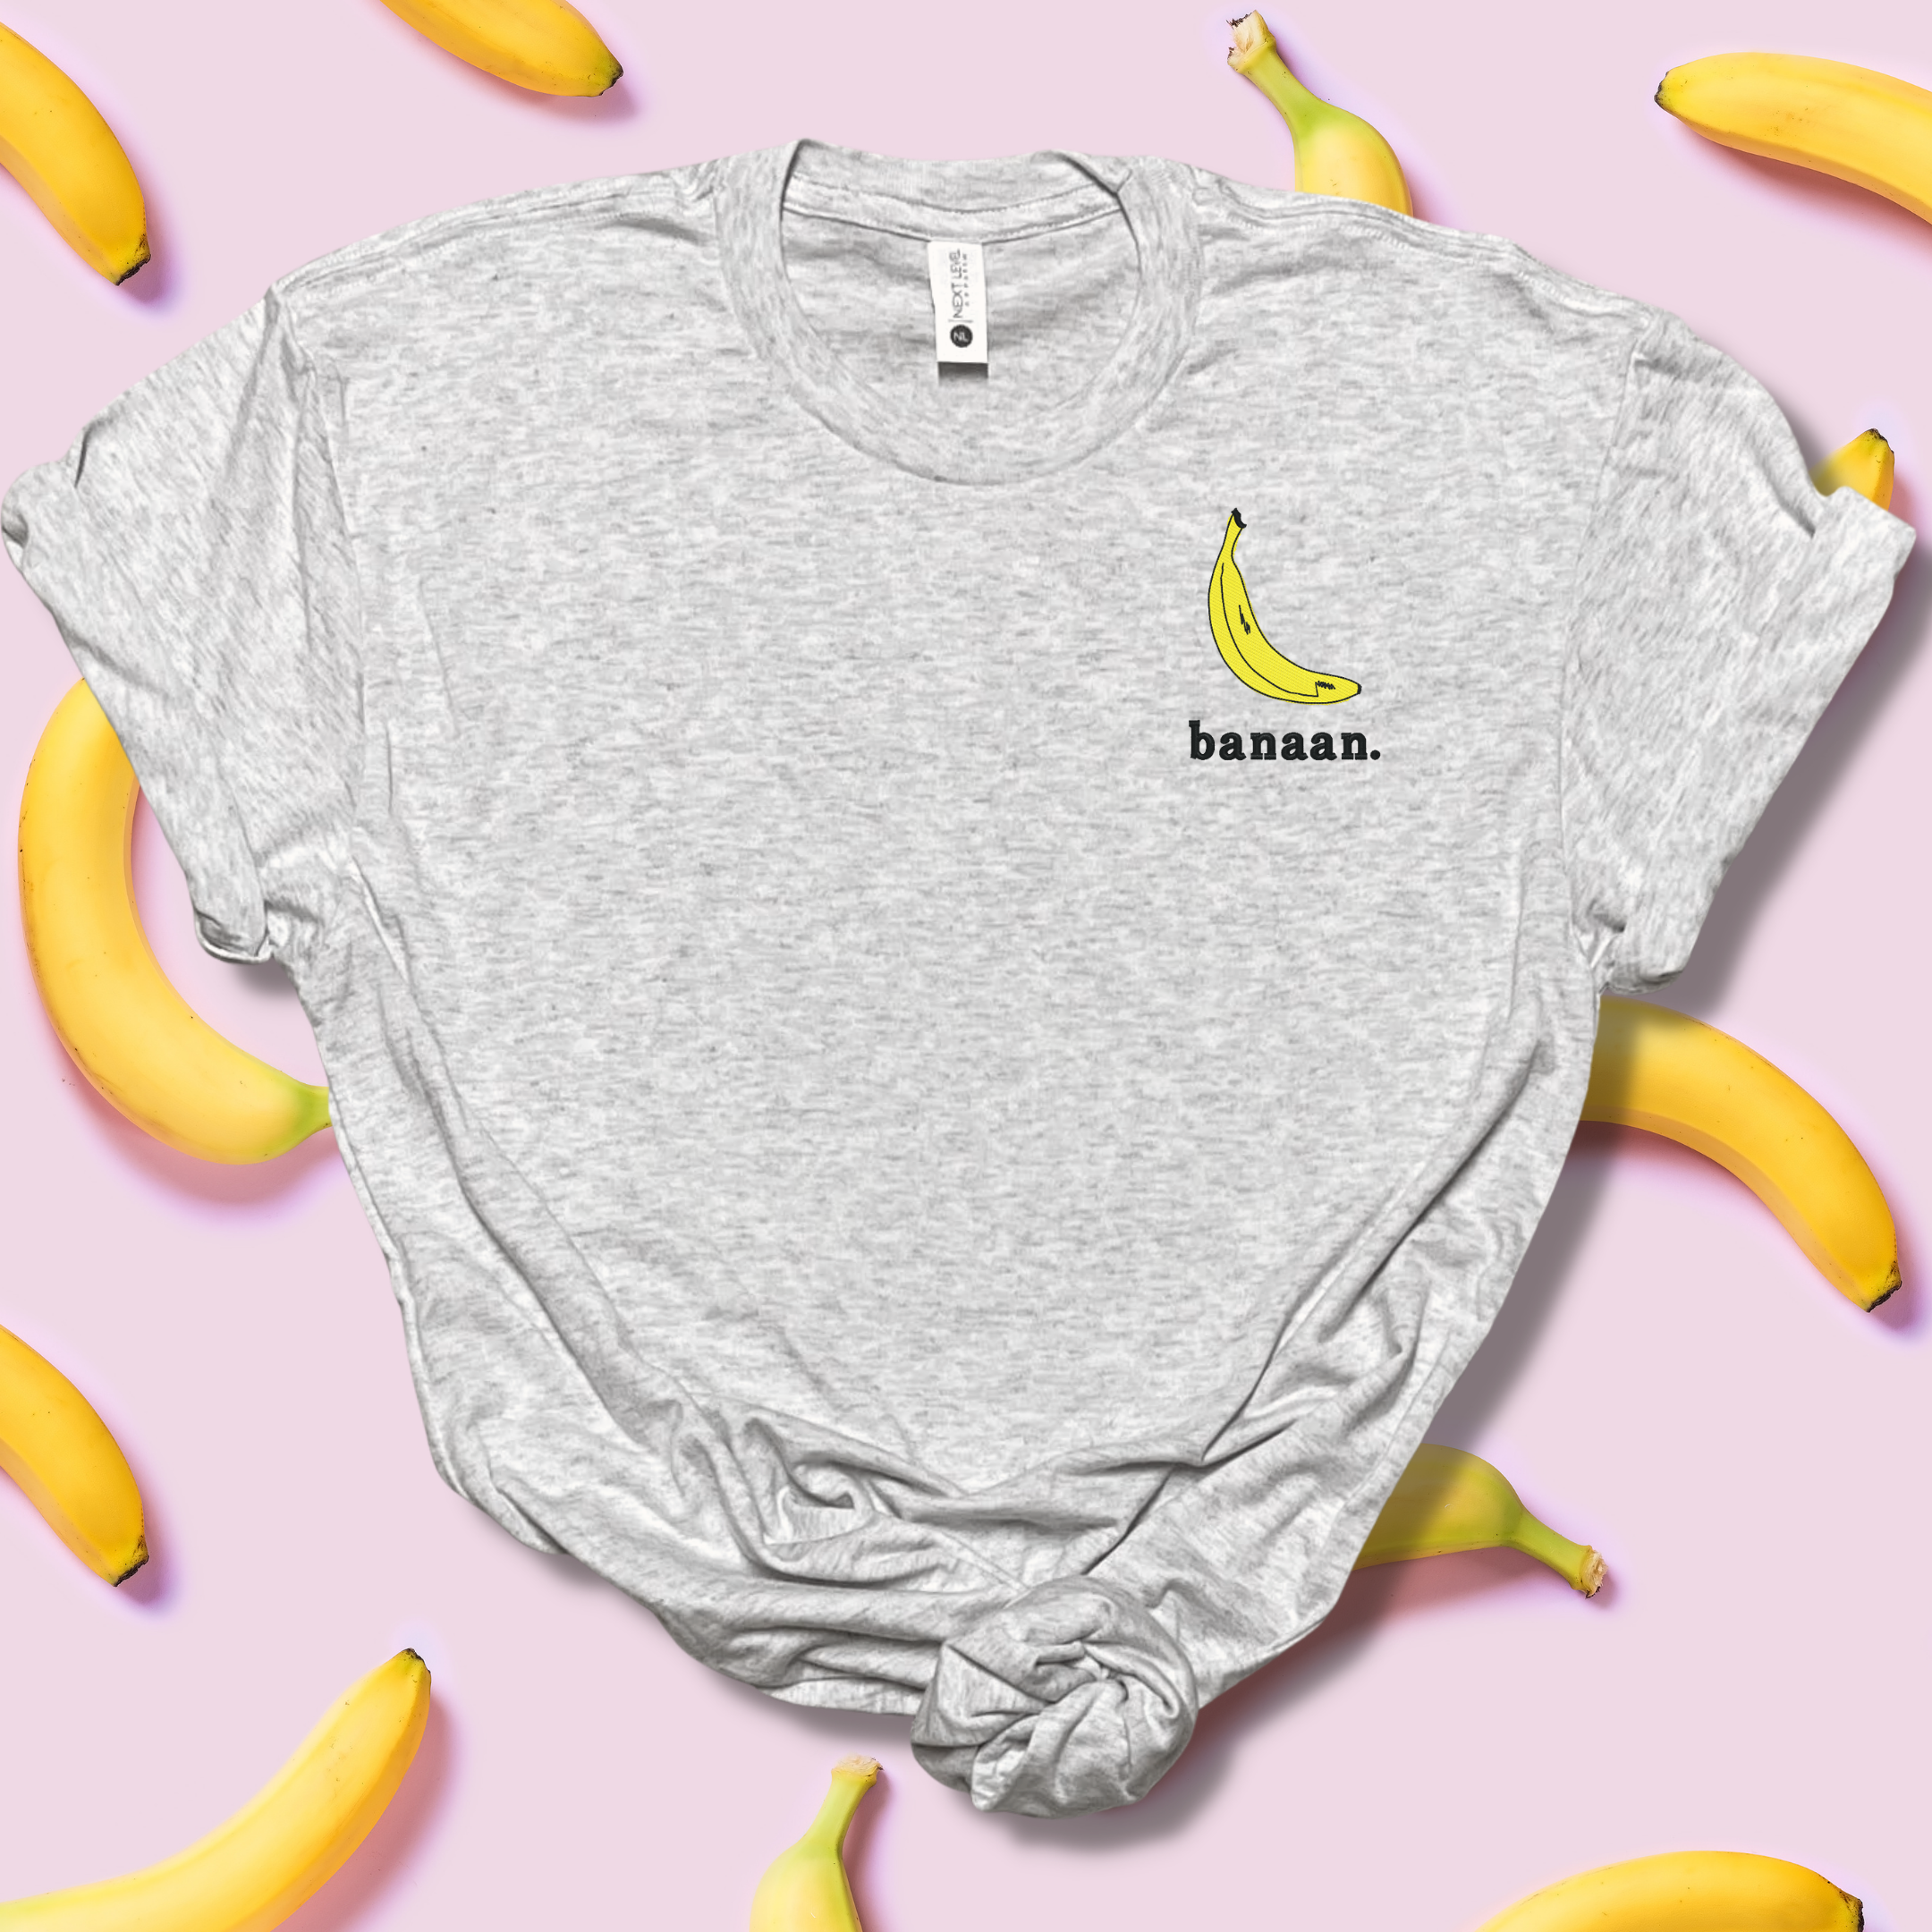 Banana Breath Embroidered Tee Shirt, Unisex